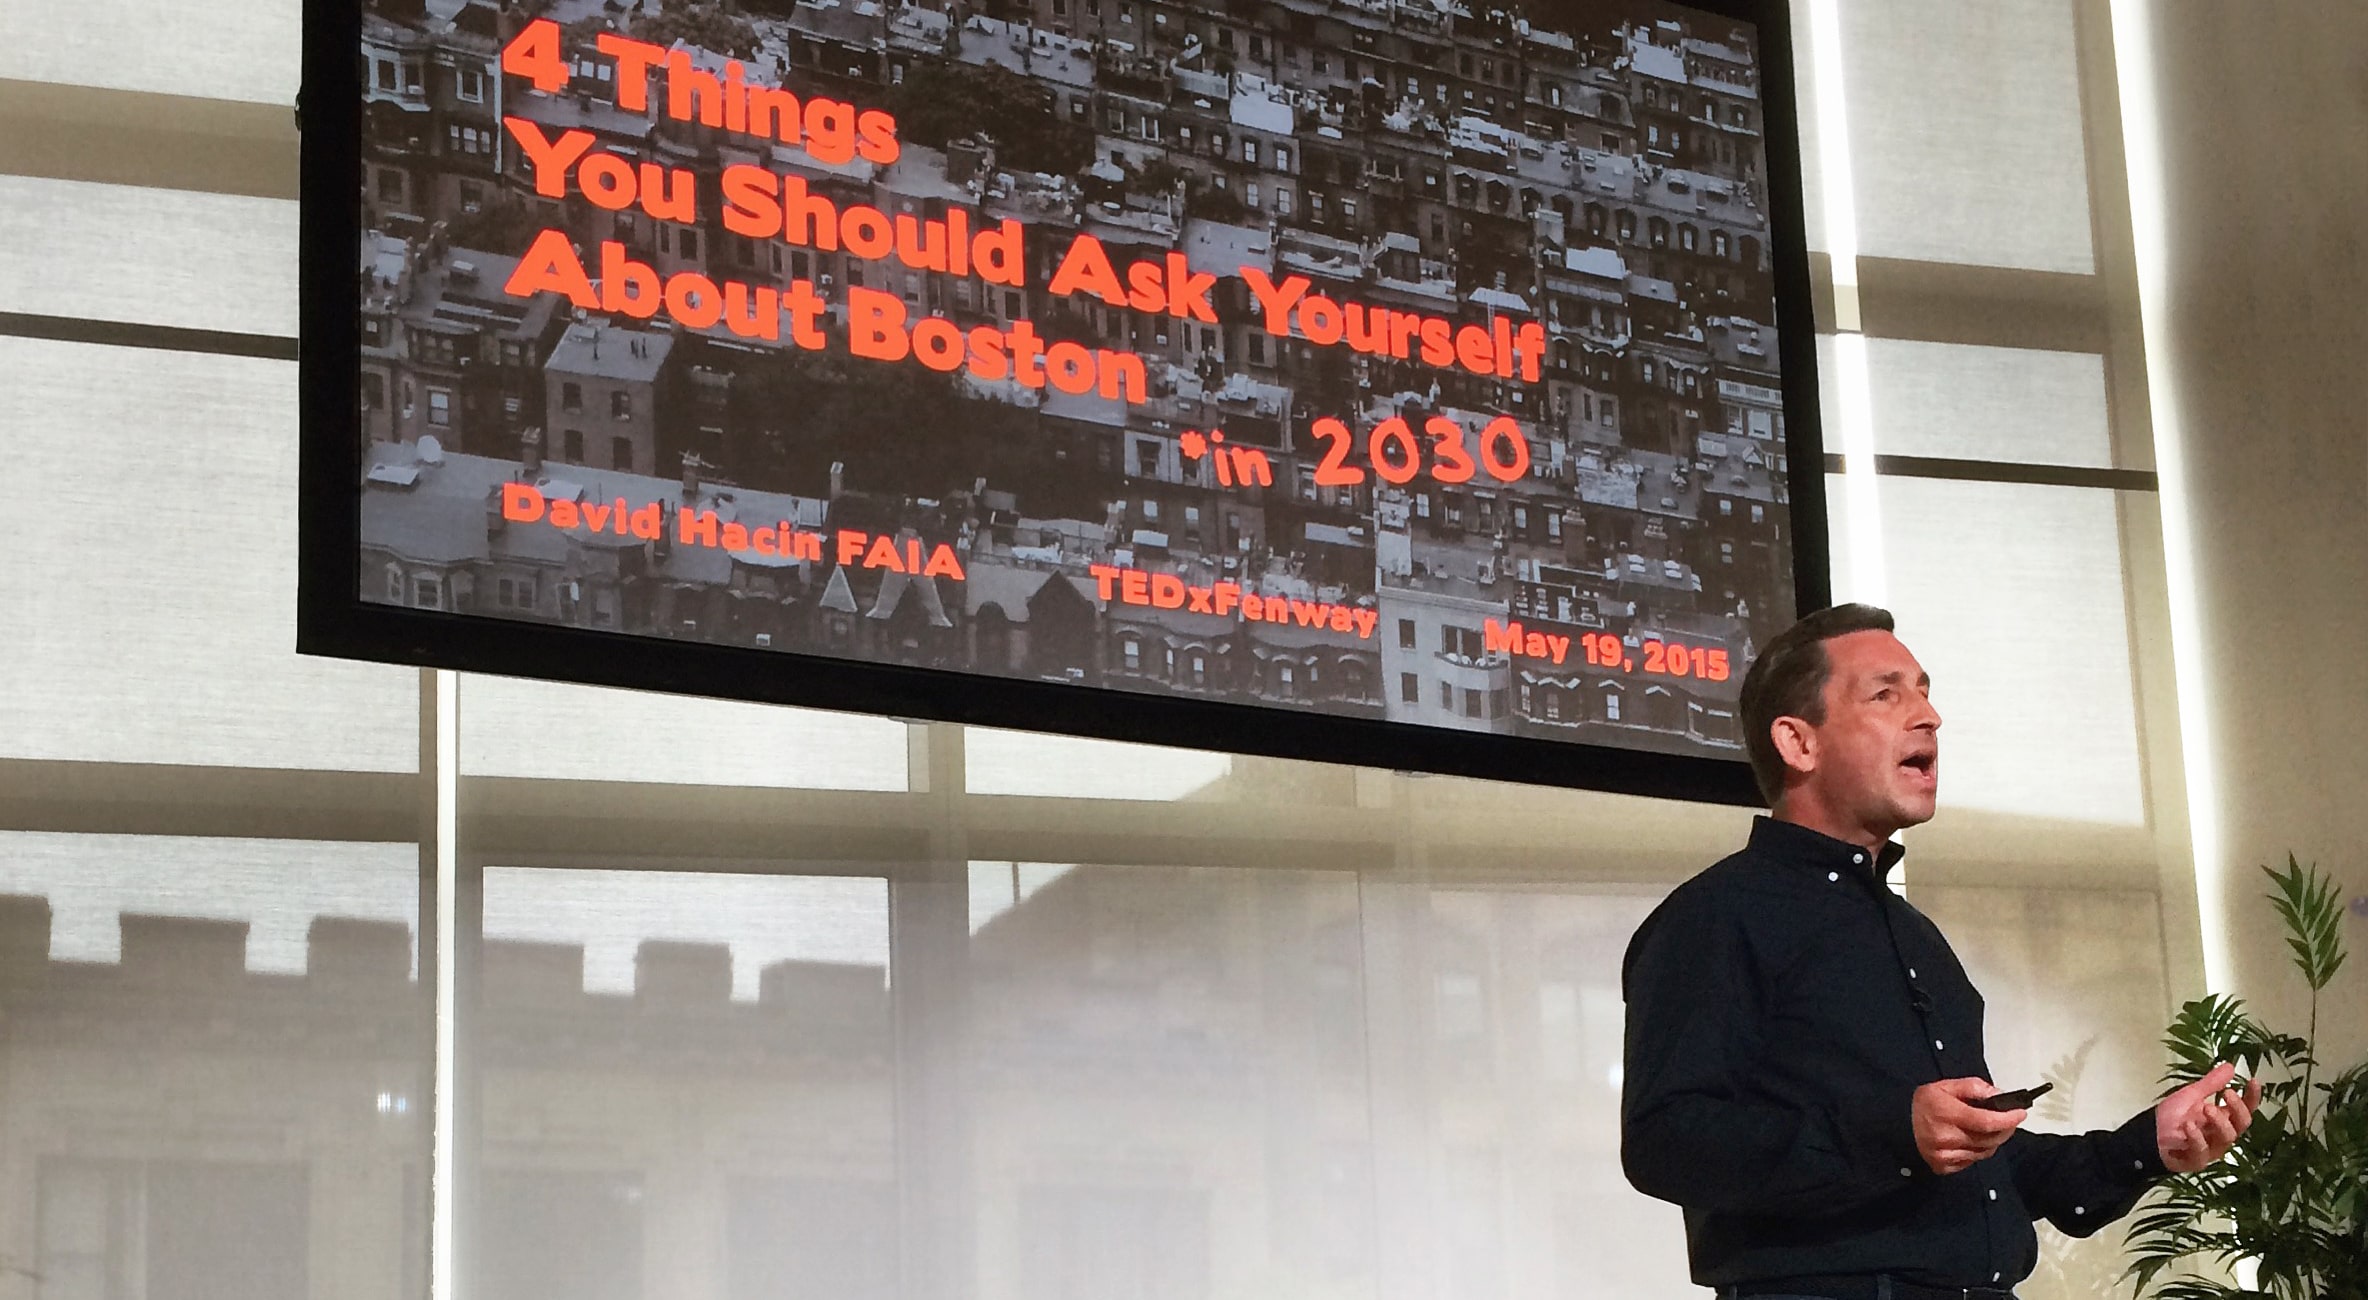 Watch David Hacin Speak at TEDxFenway